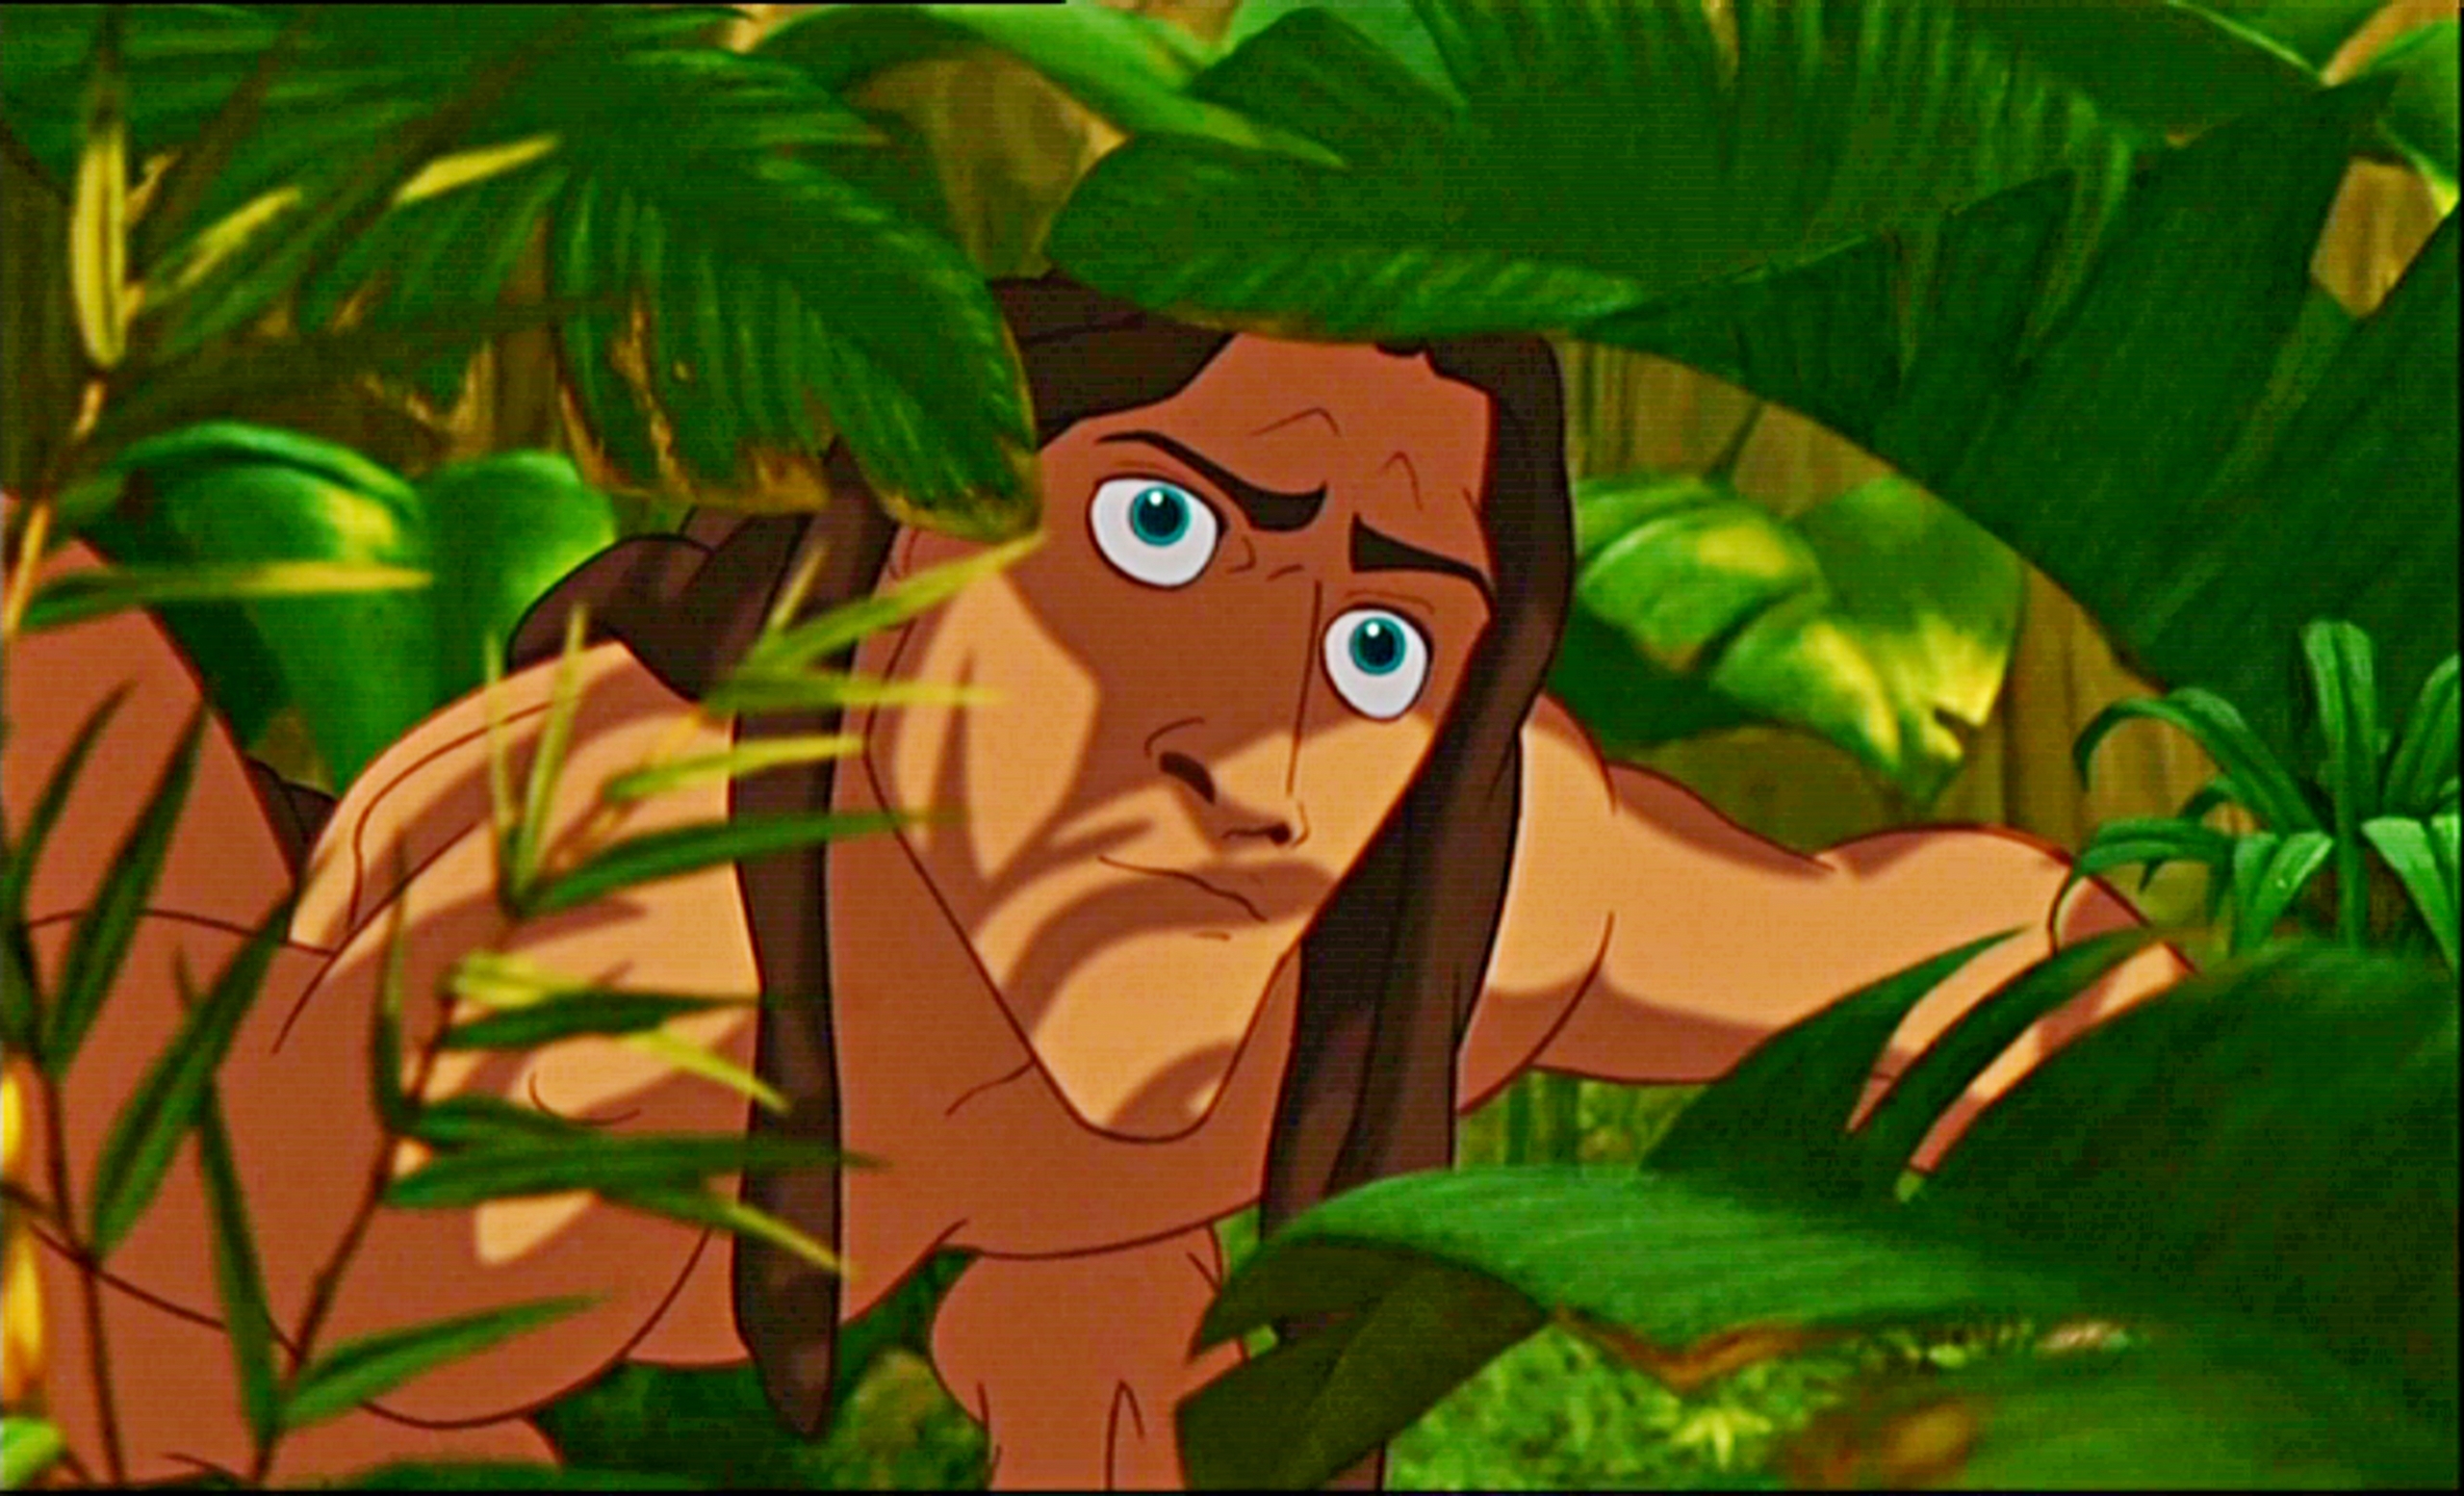 SAB 18 MAR – Leggere il cinema: Tarzan